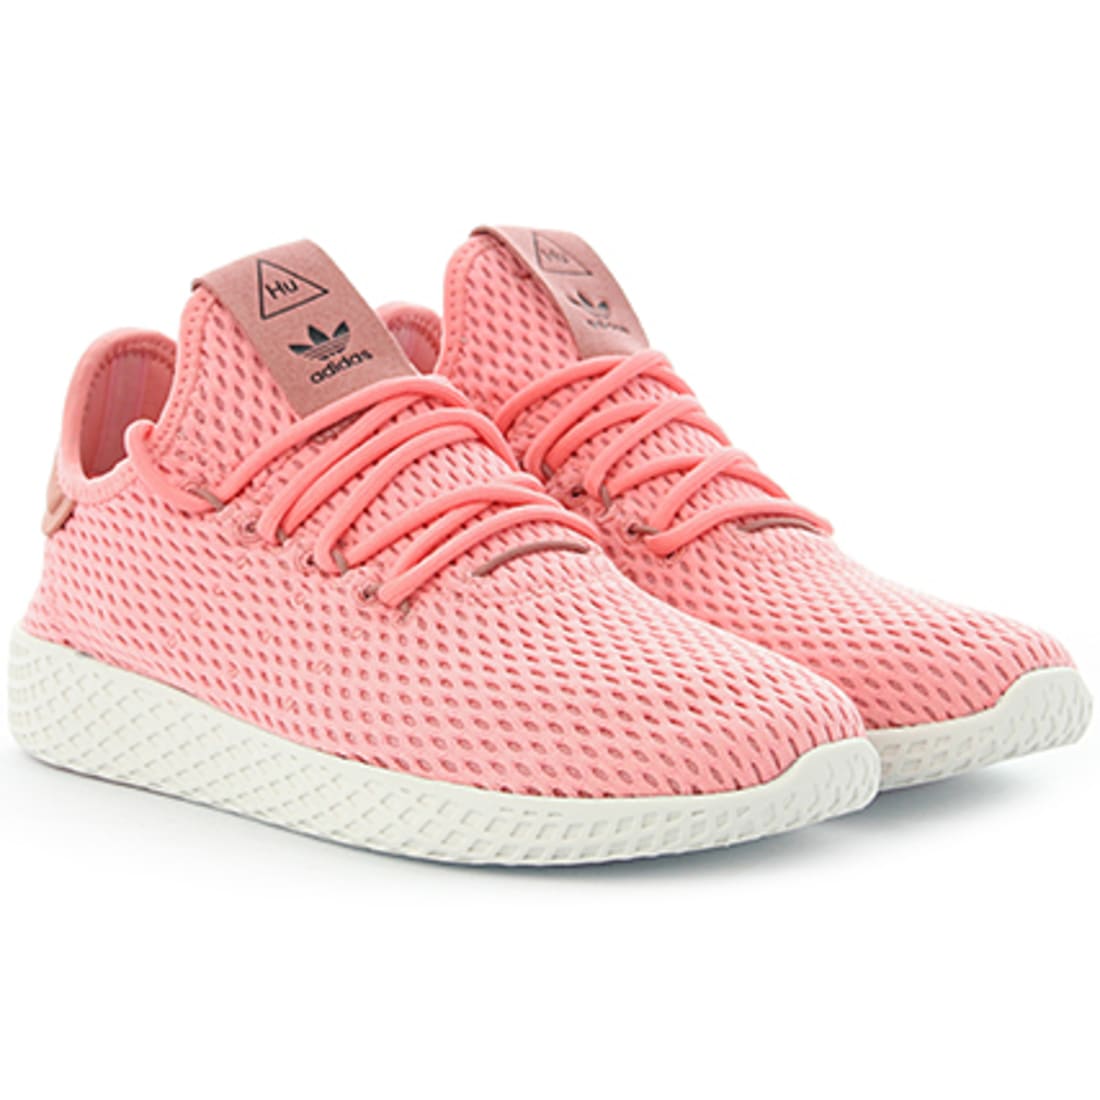 Pharrell adidas Tennis Hu Raw Pink BY8715